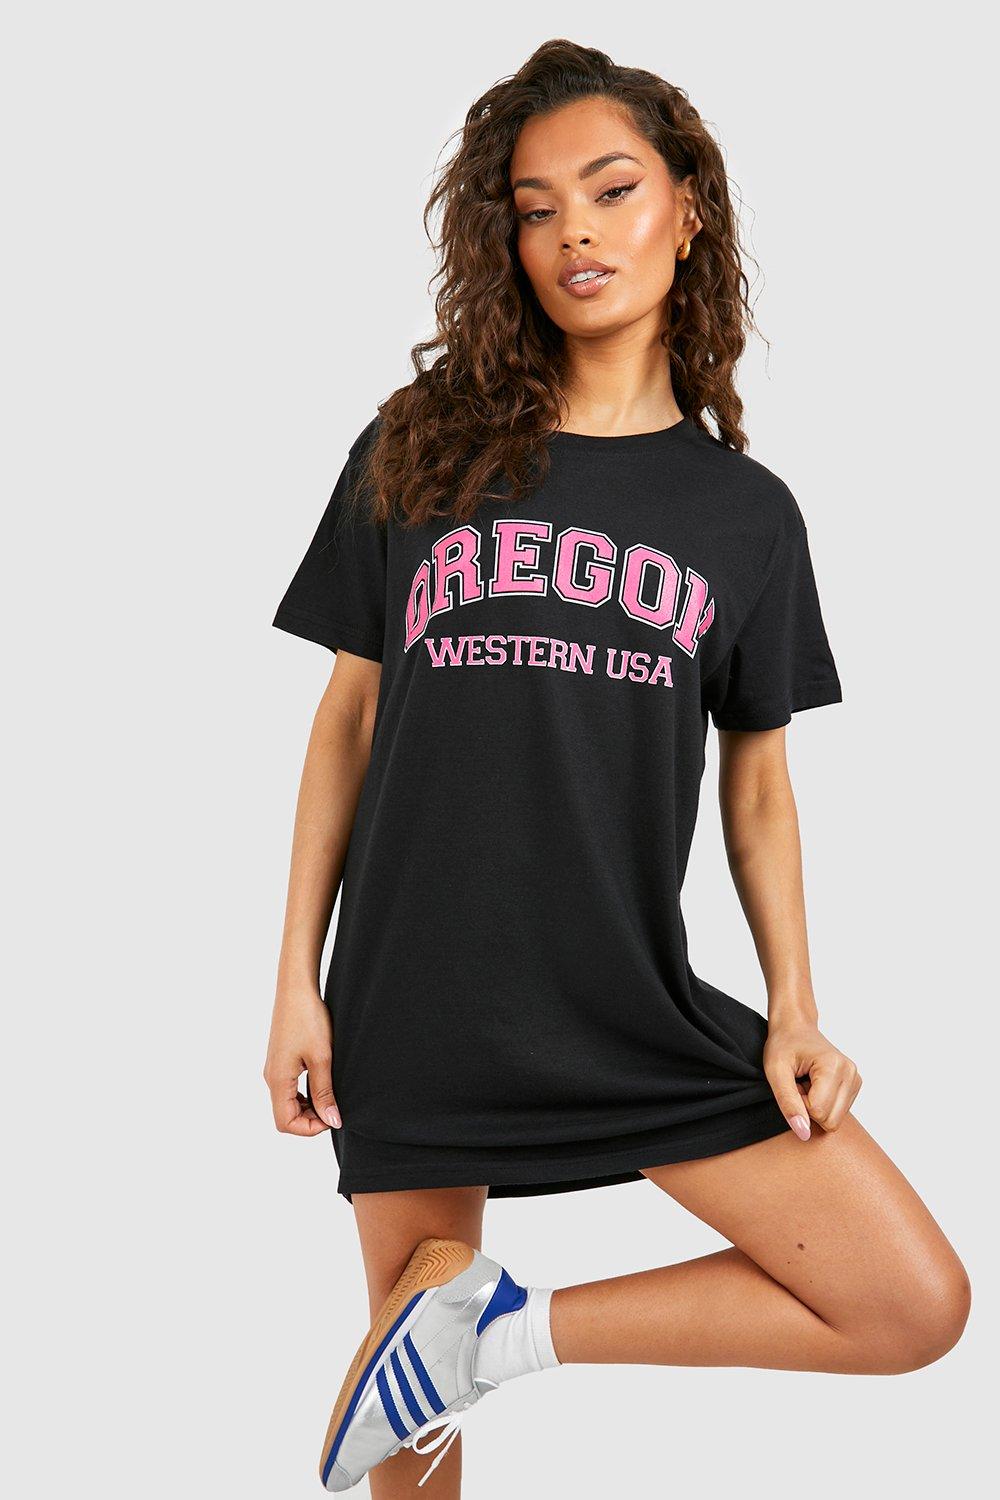 Oregon Oversized T-shirt Dress